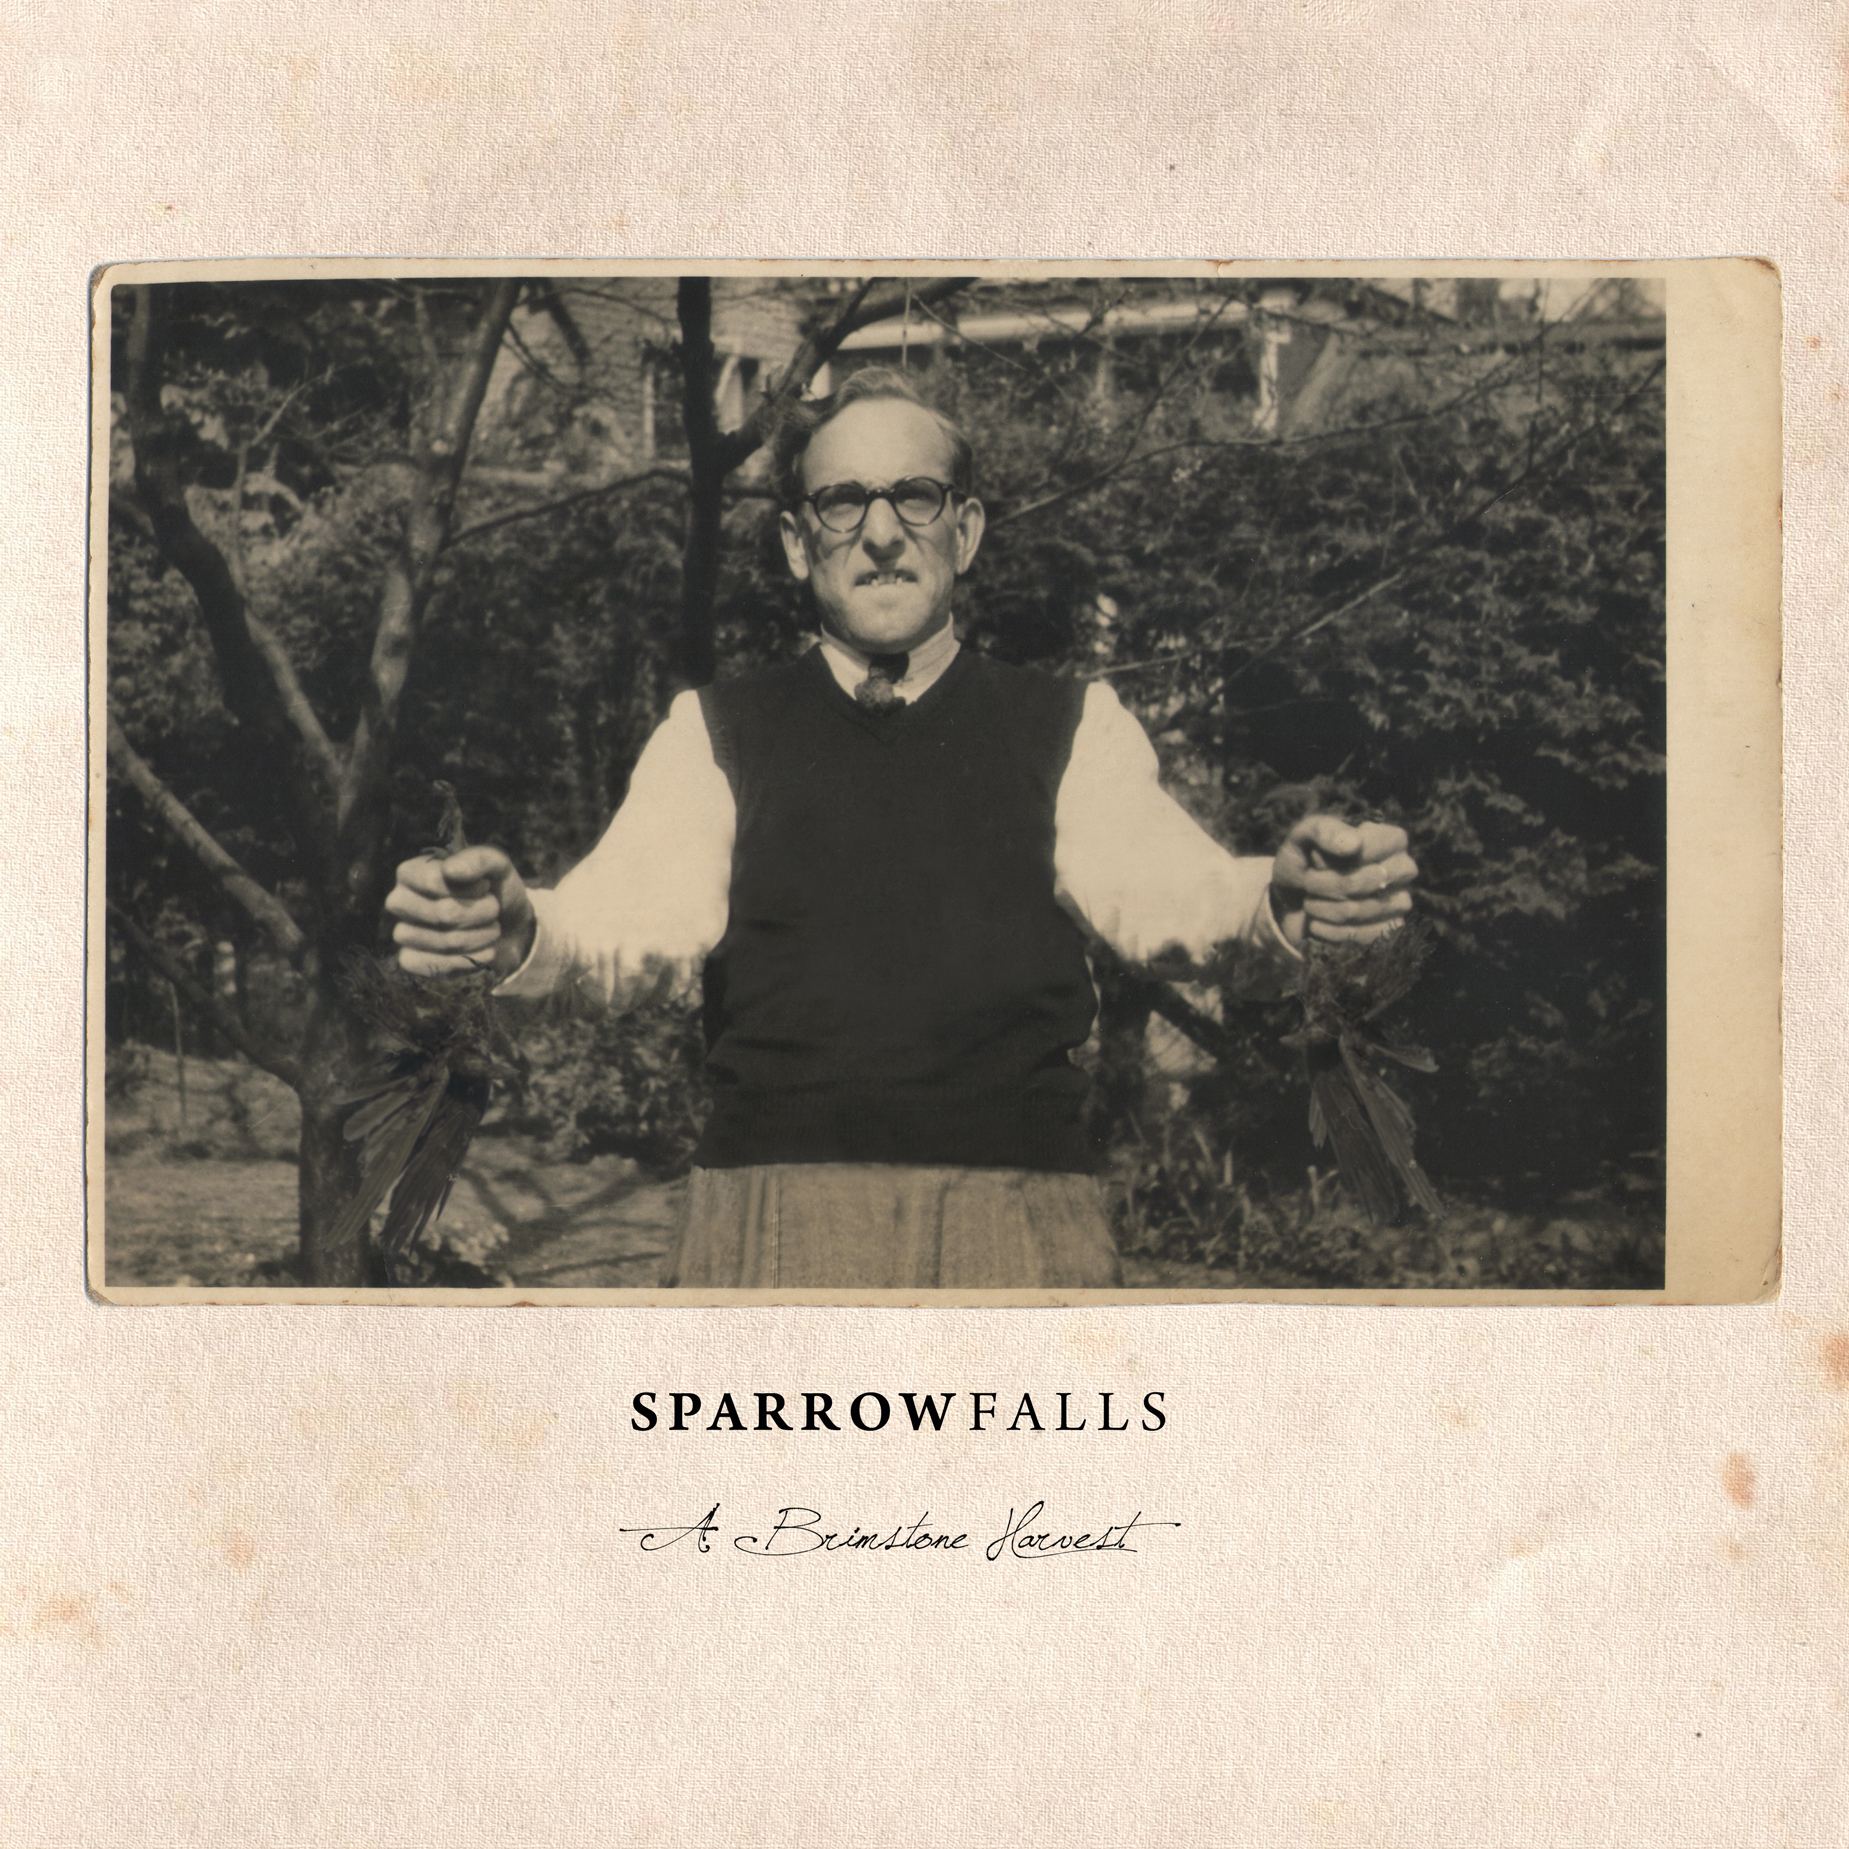 Sparrow Falls – A brimstone harvest